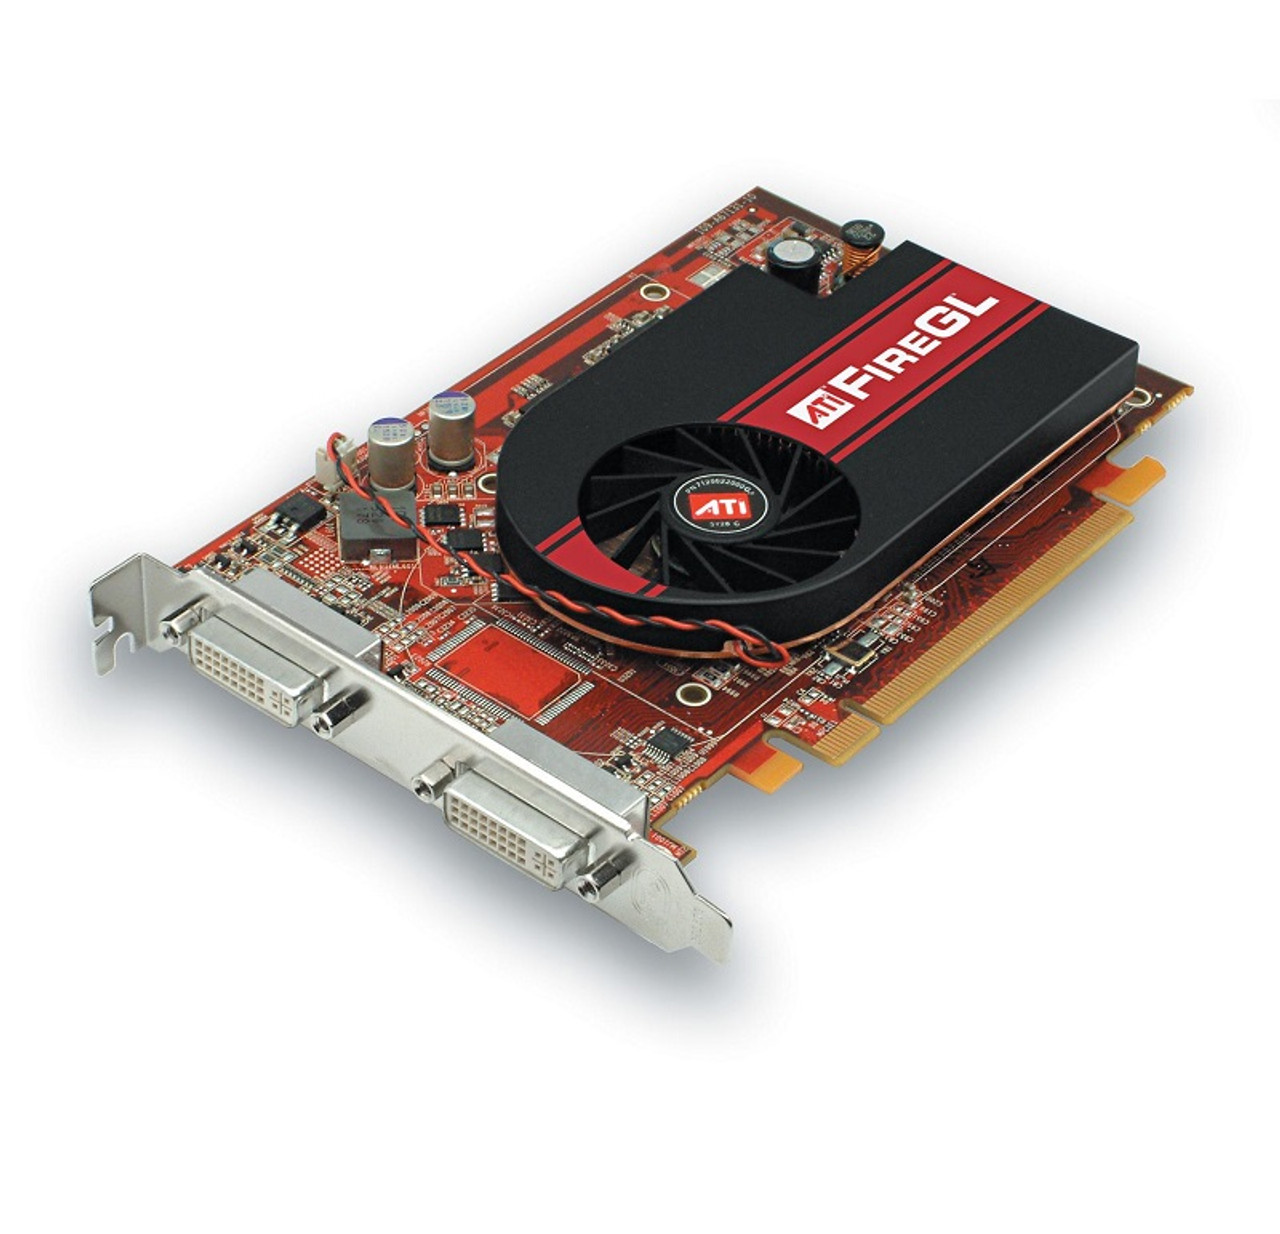 413107-001 - HP ATI FireGL V7200 PCI-Express 256MB GDDR3 Dual DVI Video Graphics Card